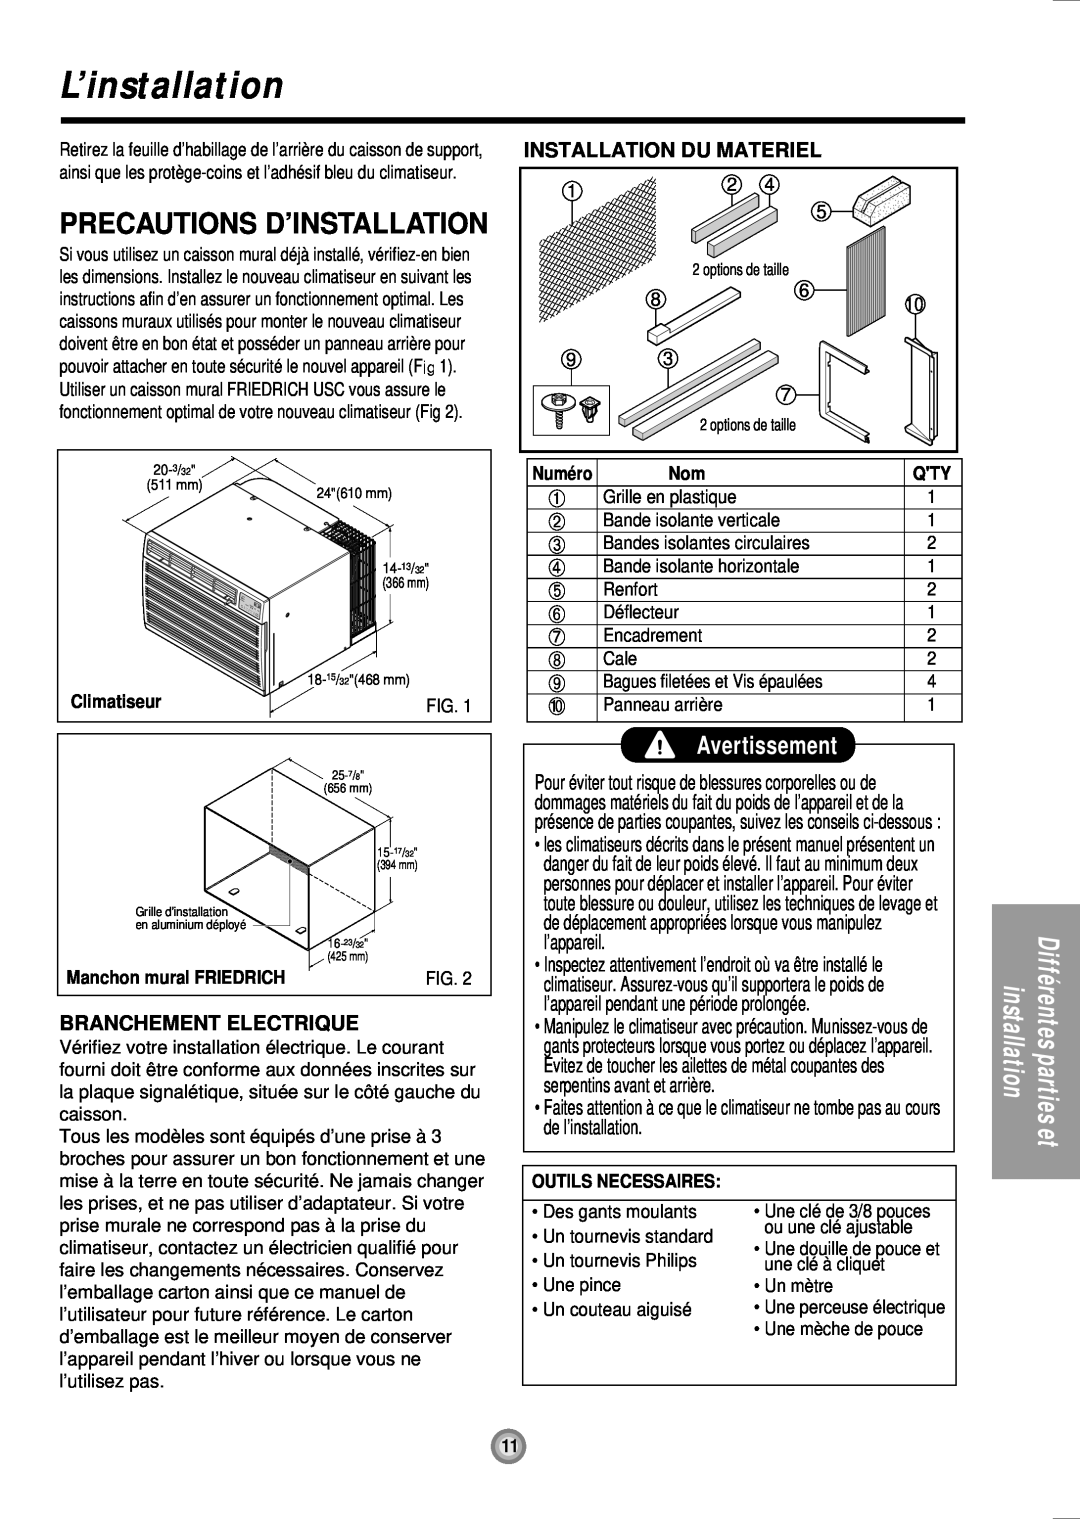 Friedrich US08, US10, US12 manual L’installation, Precautions D’Installation, Avertissement 